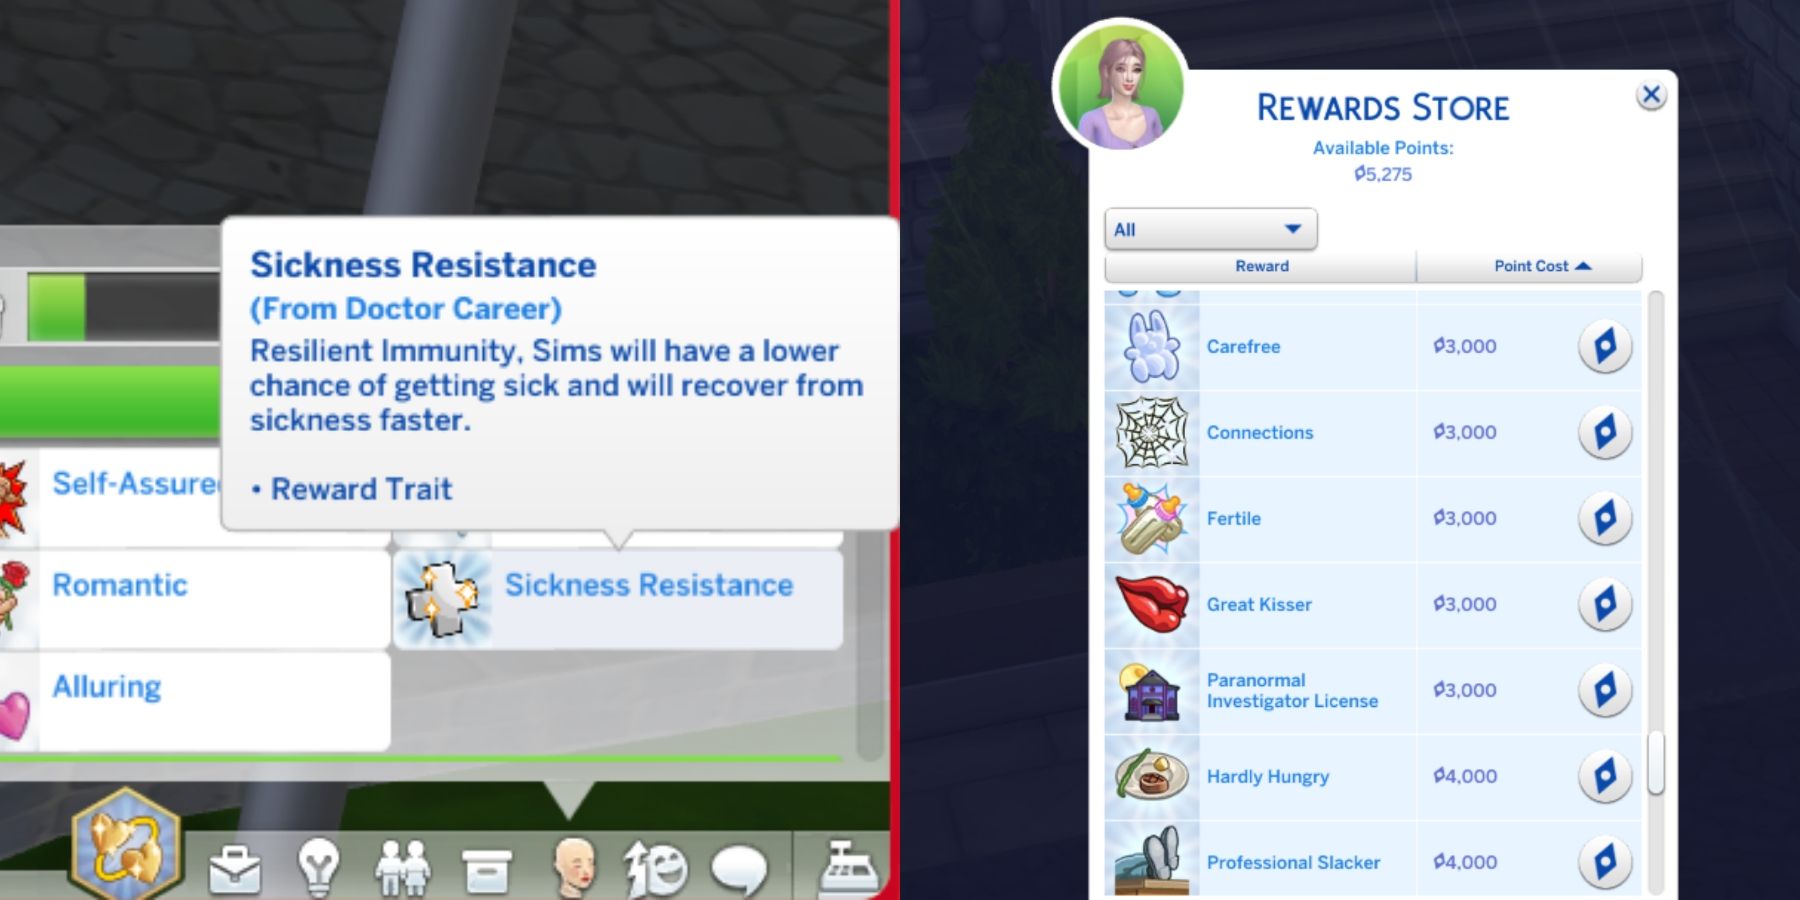 reward traits in the sims